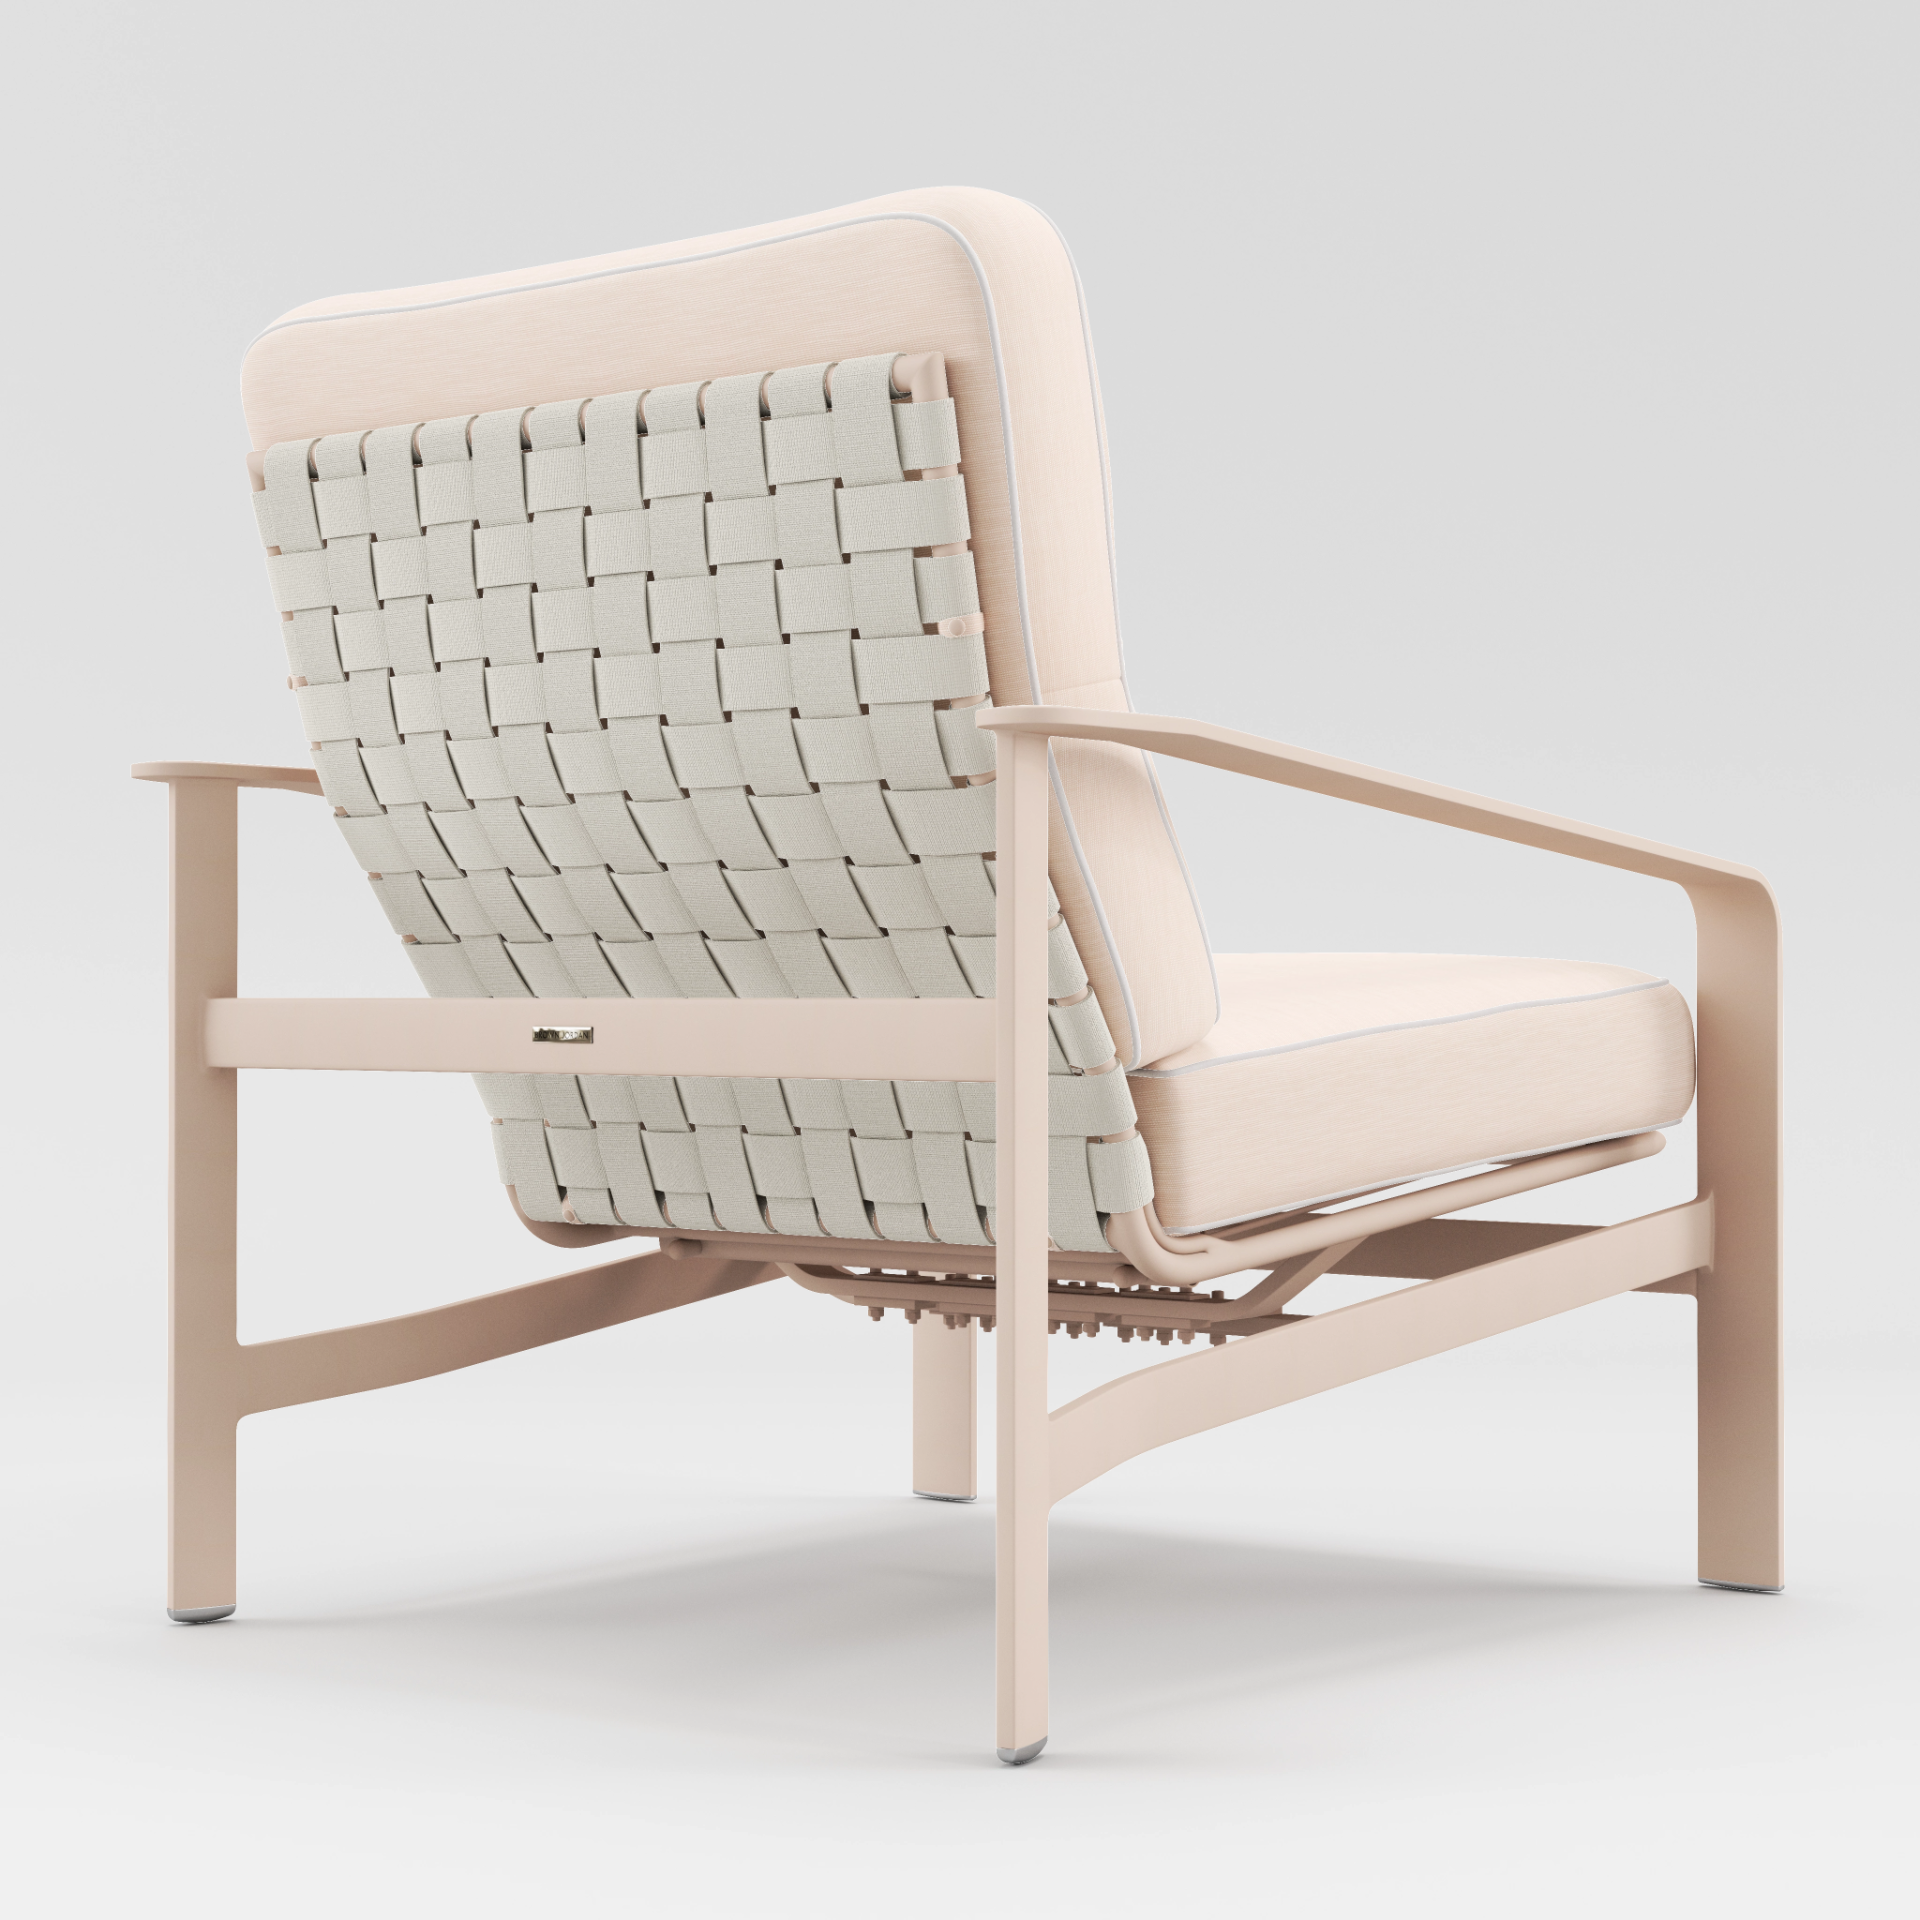 Softscape Cushion Motion Lounge Chair by Brown Jordan